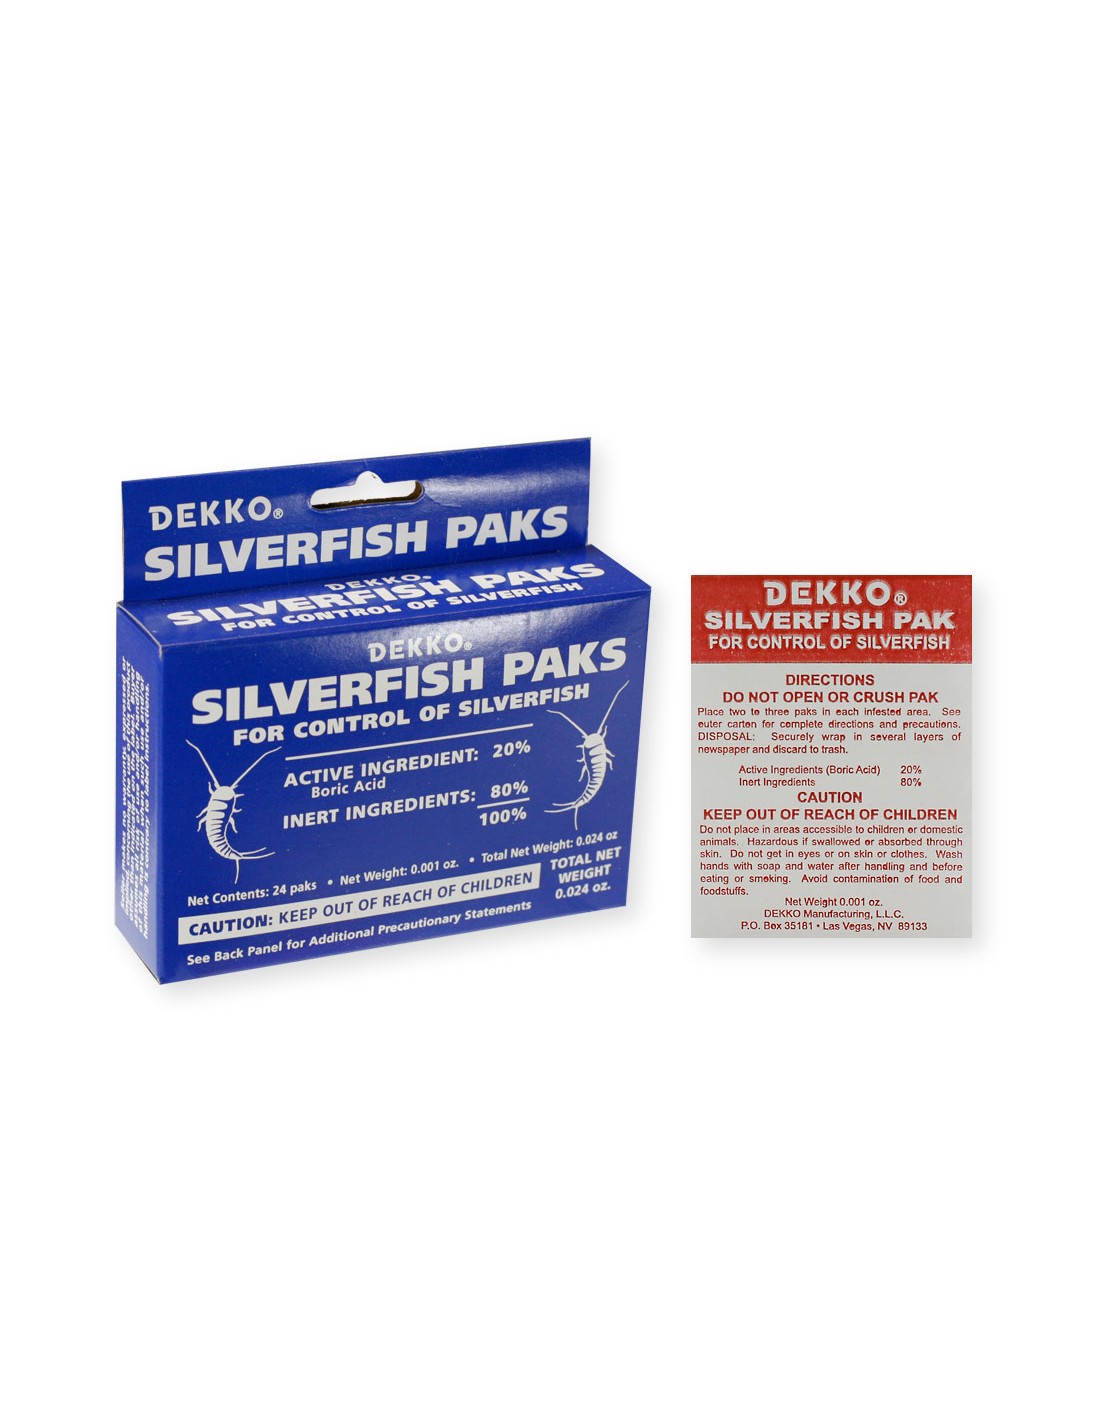 does peppermint essential oil work against silverfish?  I heard that cedar oil or chips work.